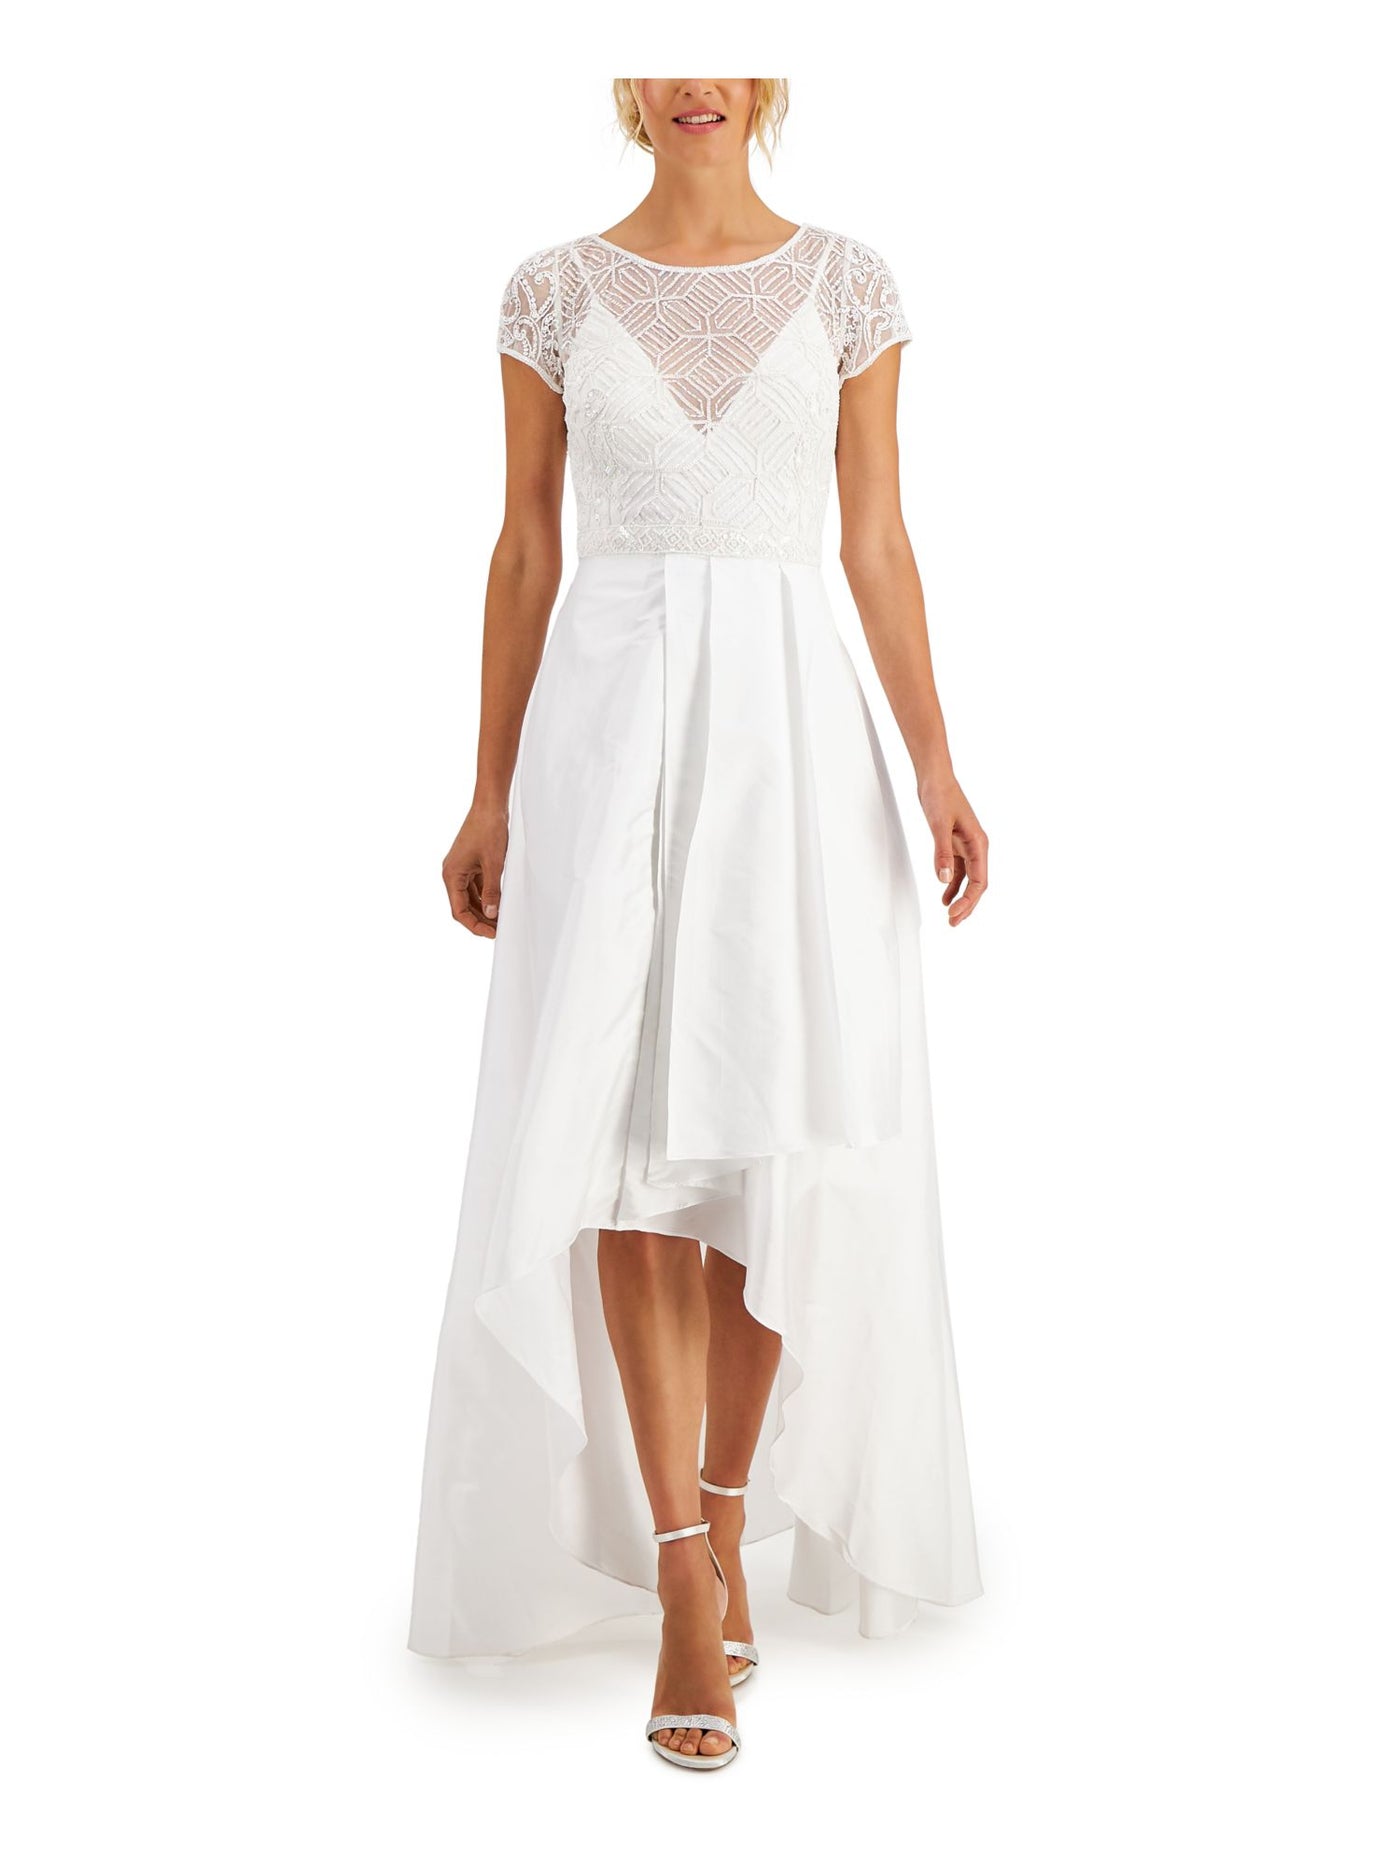 JKARA Womens White Zippered Beaded Overlay Lined Sleeveless V Neck Full-Length Evening Hi-Lo Dress L